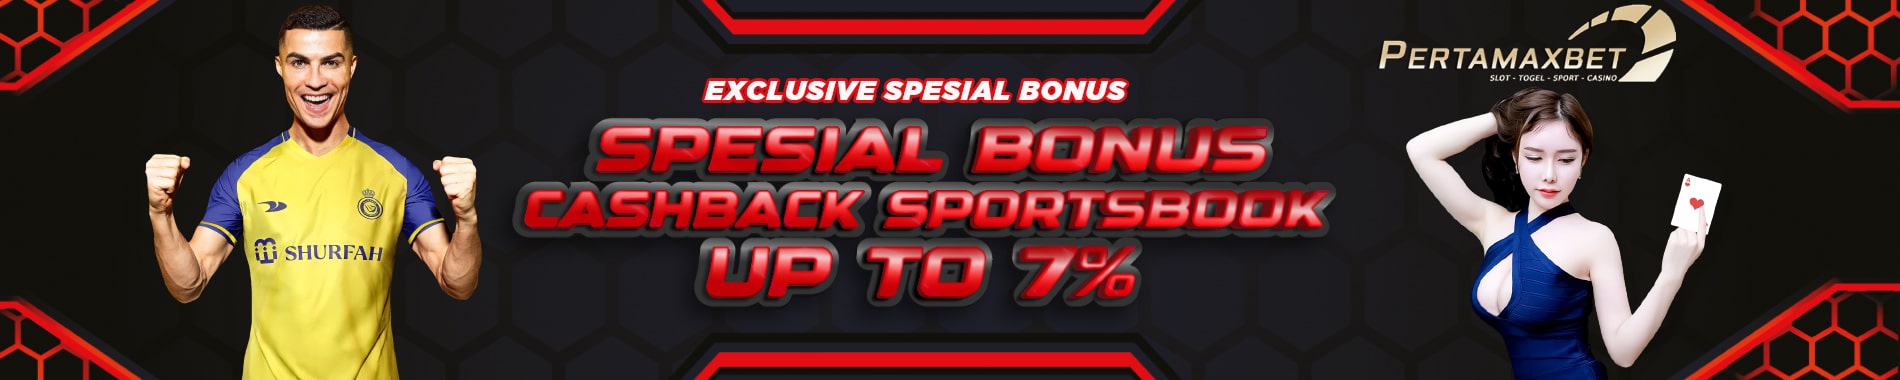 Bonus Cashback 7% Sportsbook